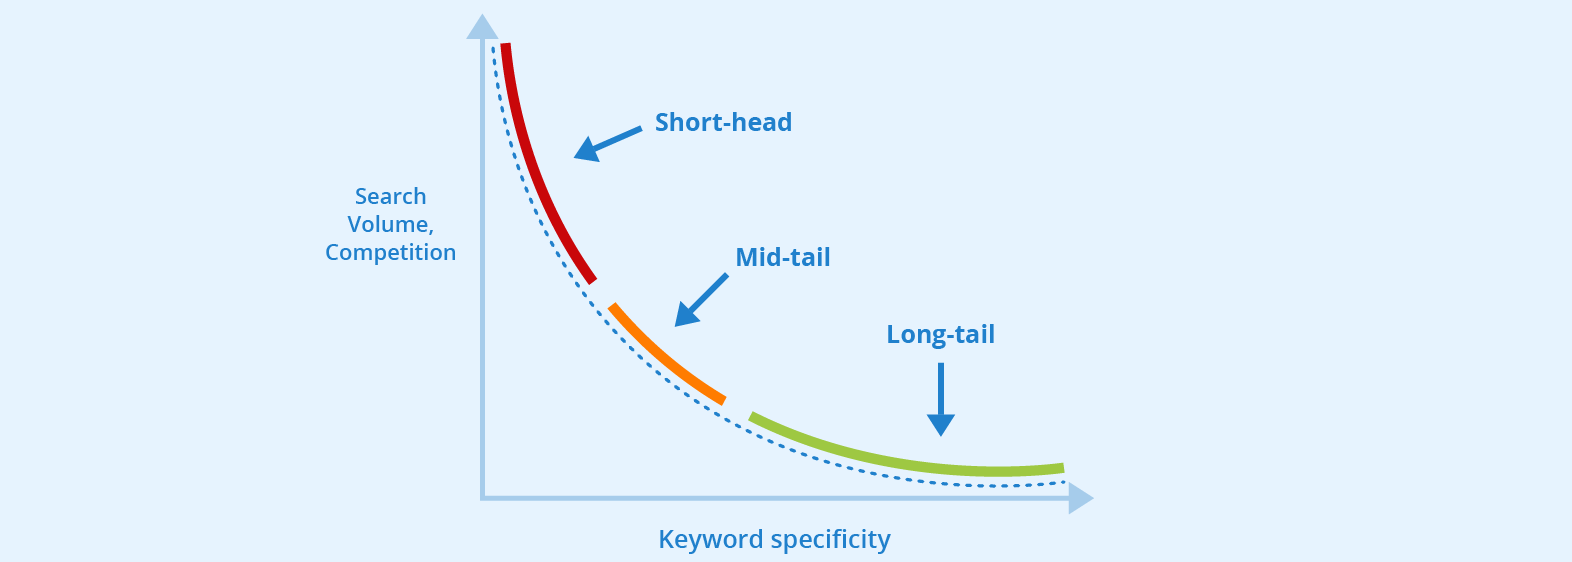 Head keywords vs long tail keywords